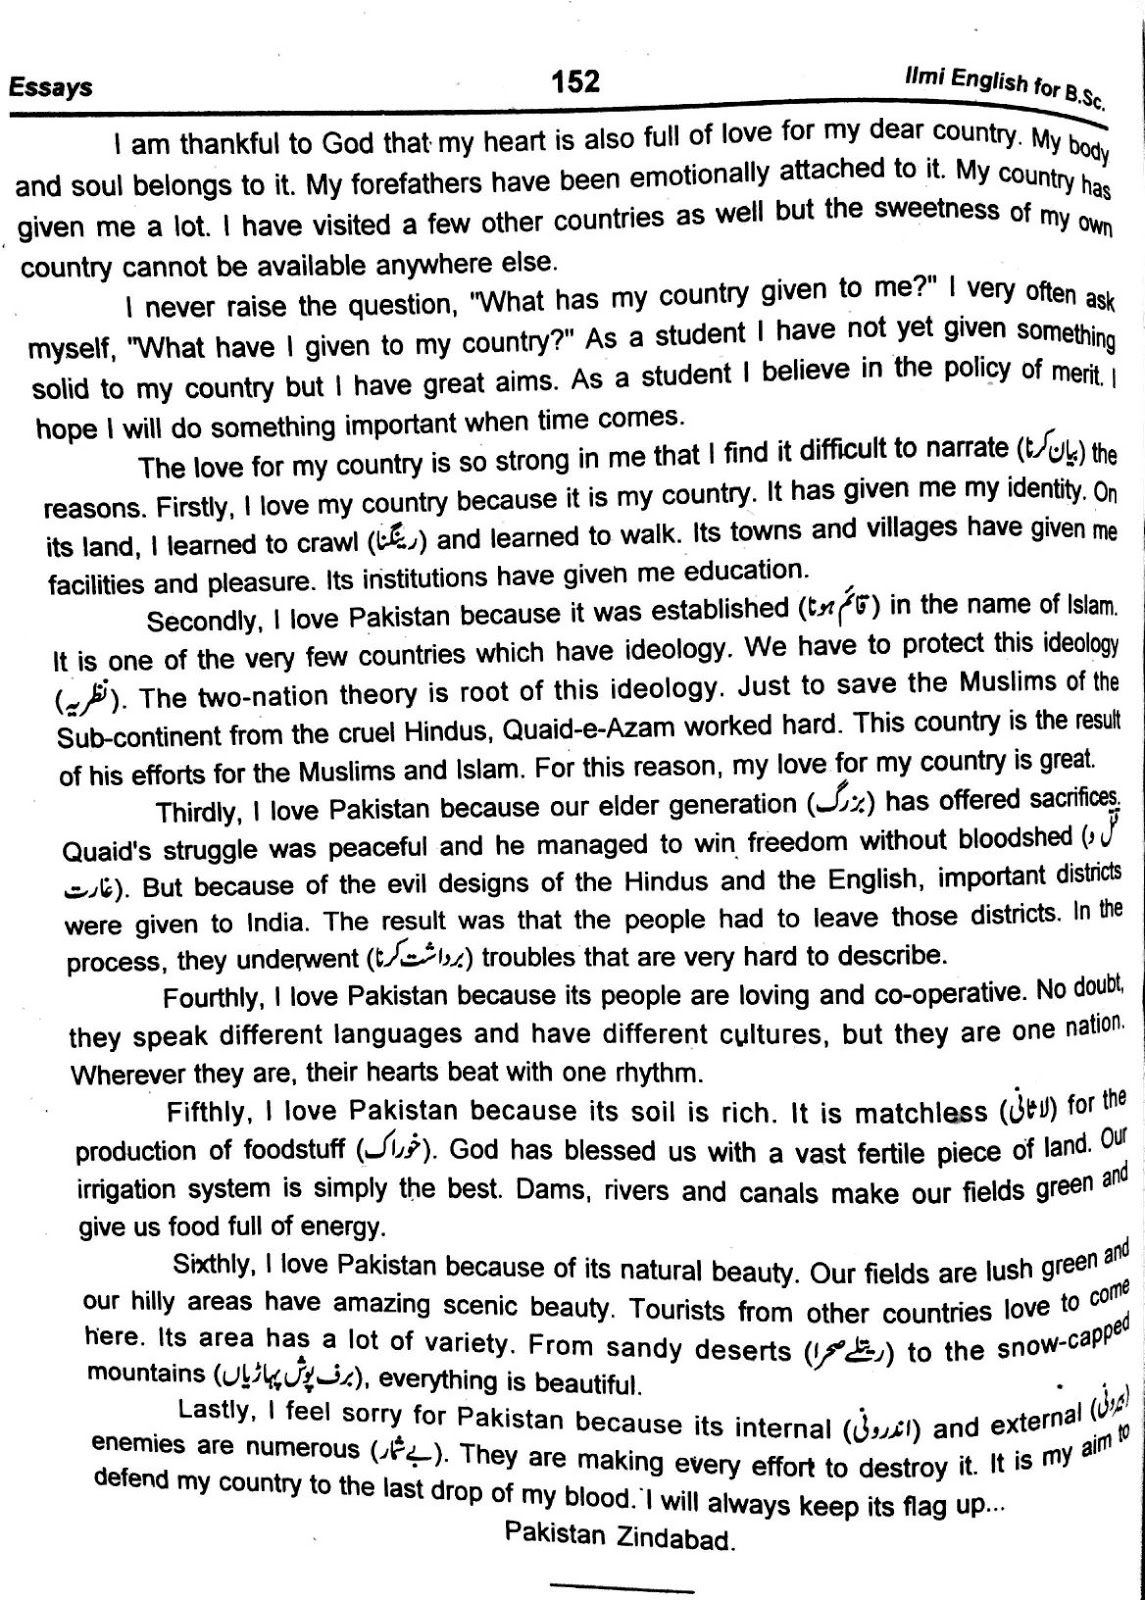 My Country (Pakistan) English Essays